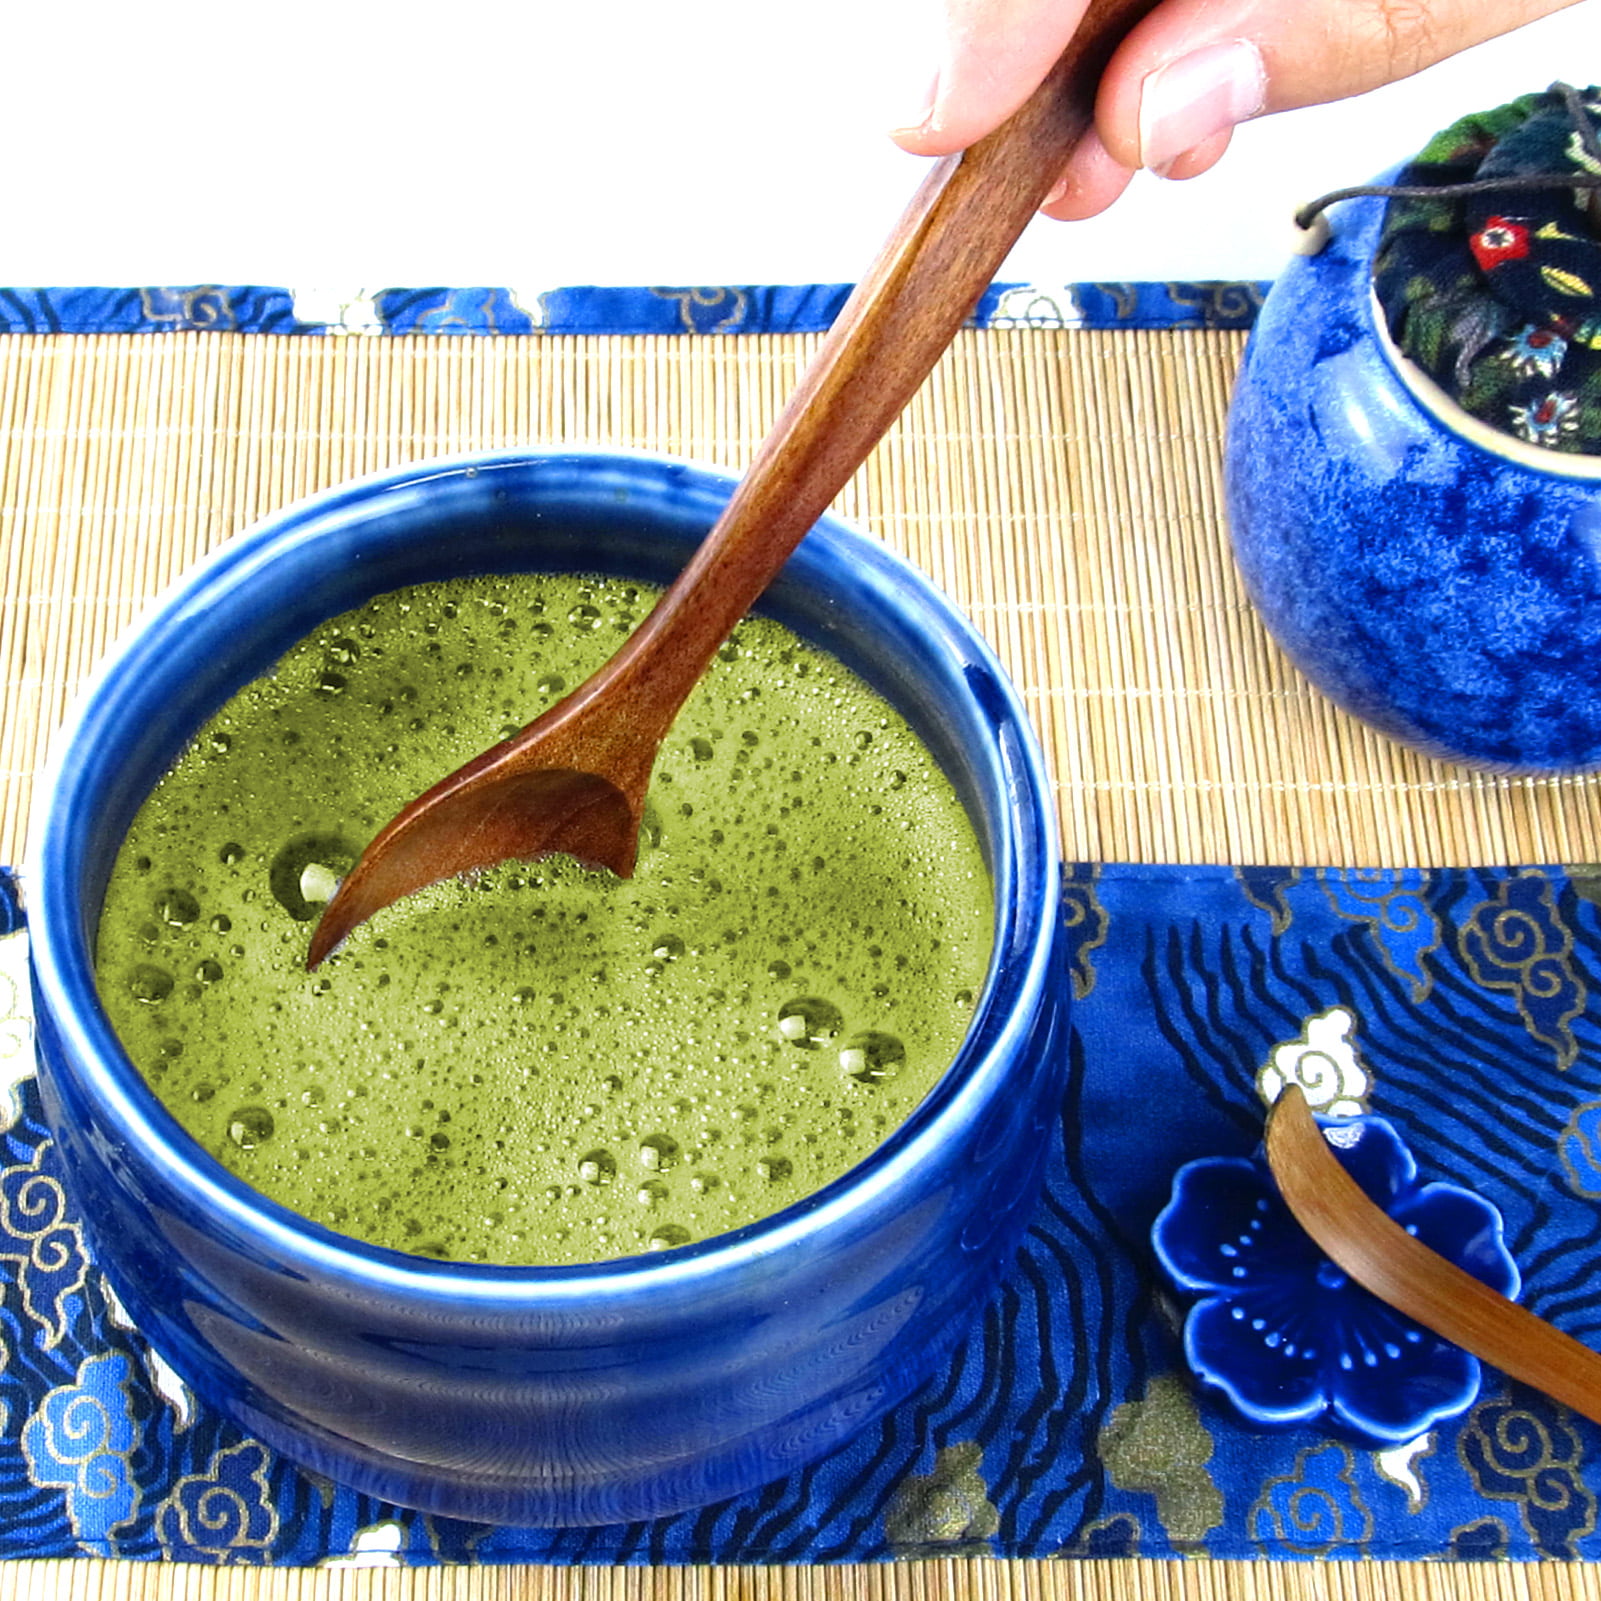 Ebros Japanese Traditional Tea Ceremony Matcha Green Bowl Whisk & Scoop Set